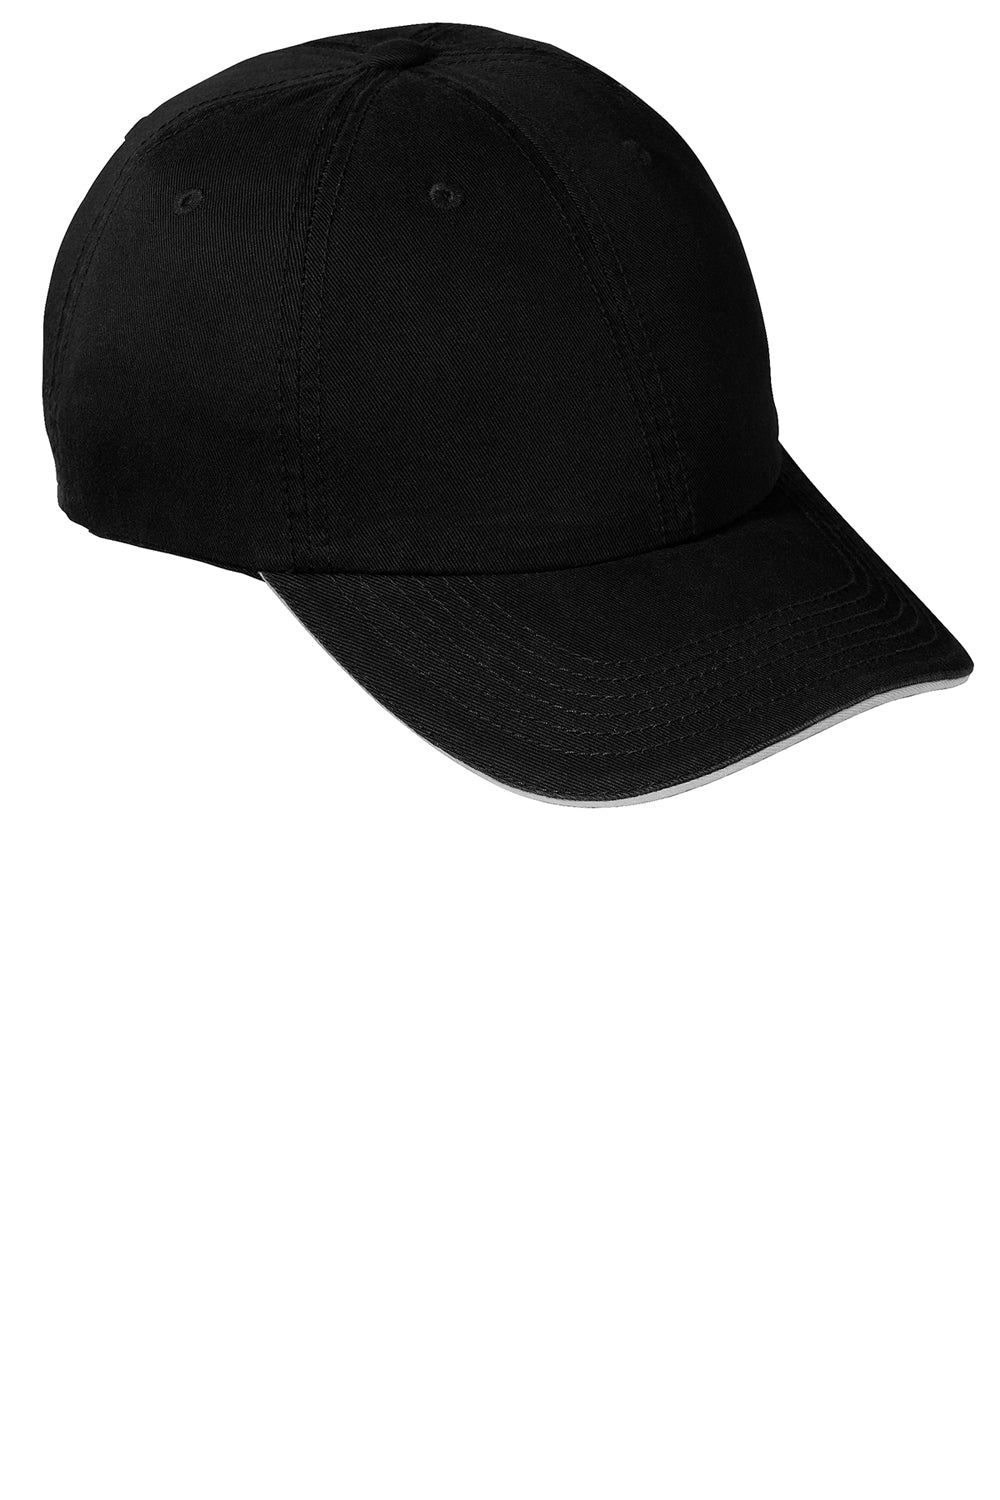 Port & Company CP79 Mens Adjustable Hat Black Front